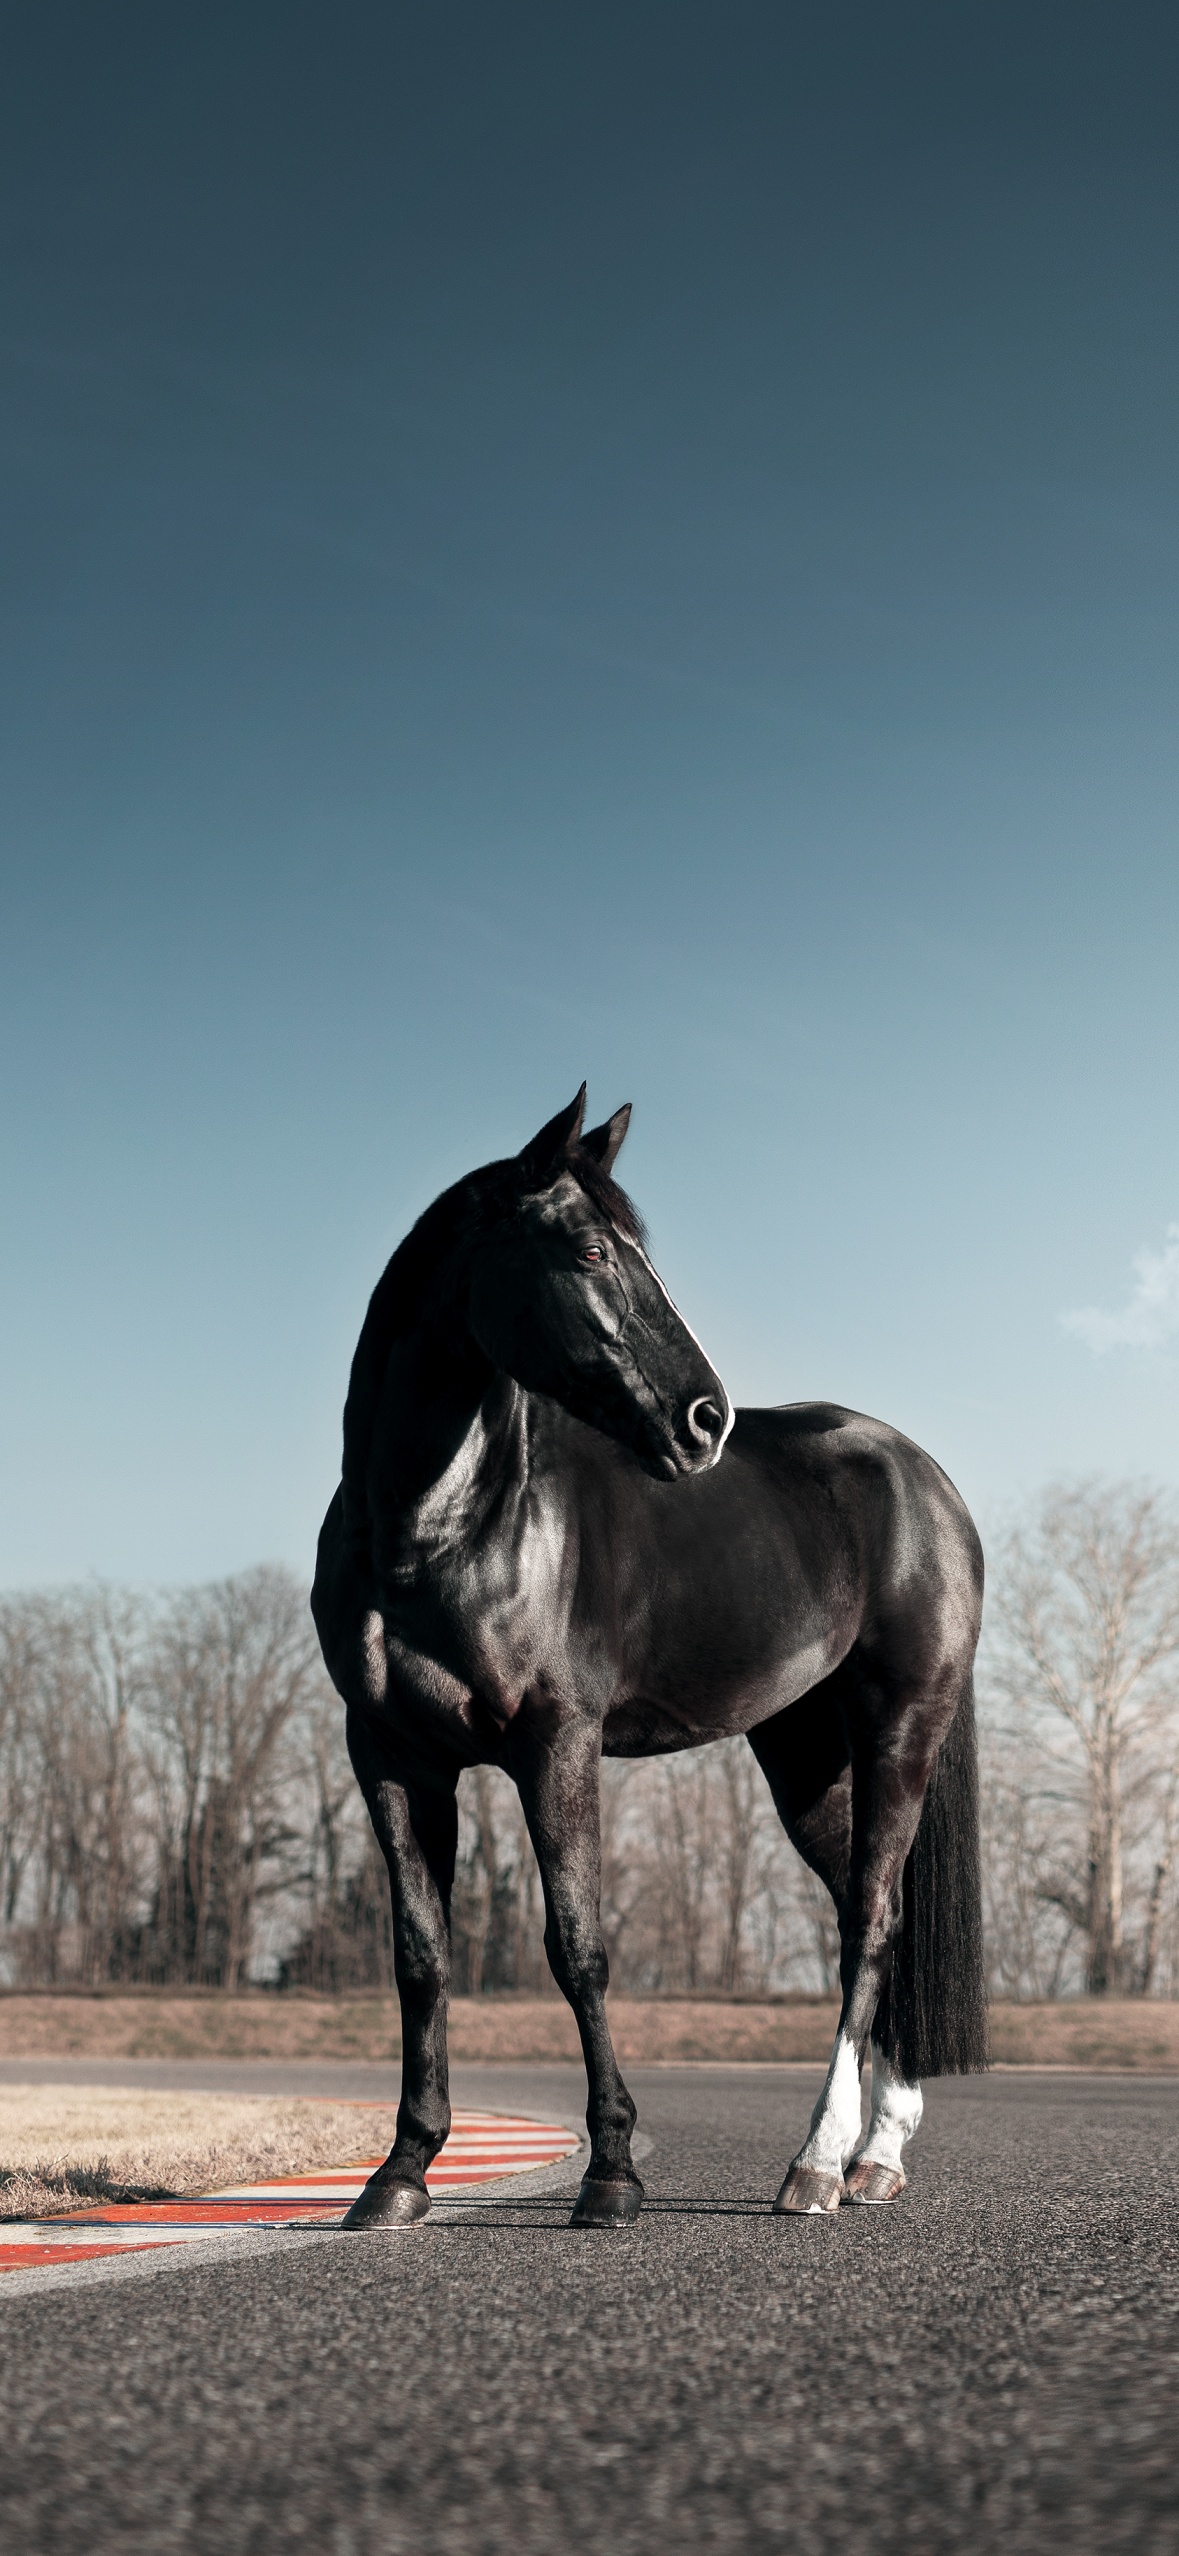 Black Horse Wallpaper Images  Free Download on Freepik